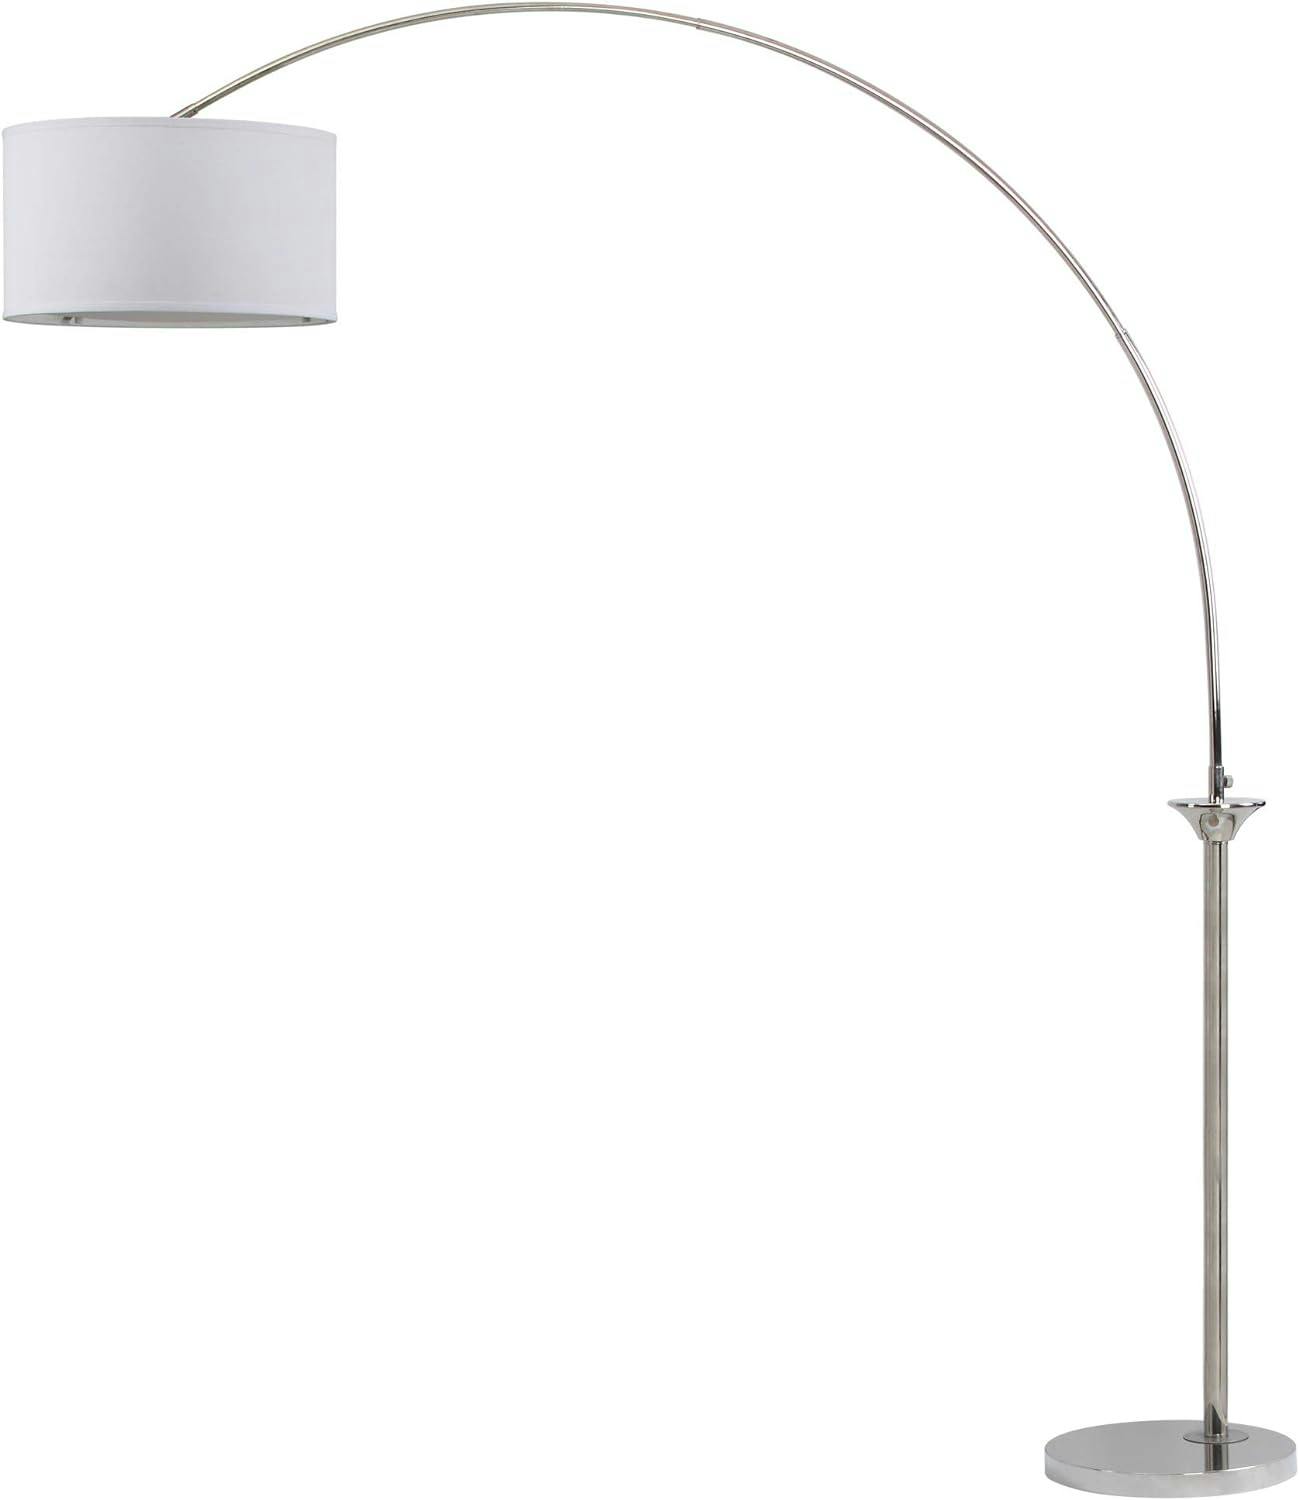 Elegant Adjustable Arc Floor Lamp in Gleaming Nickel with Cotton Shade